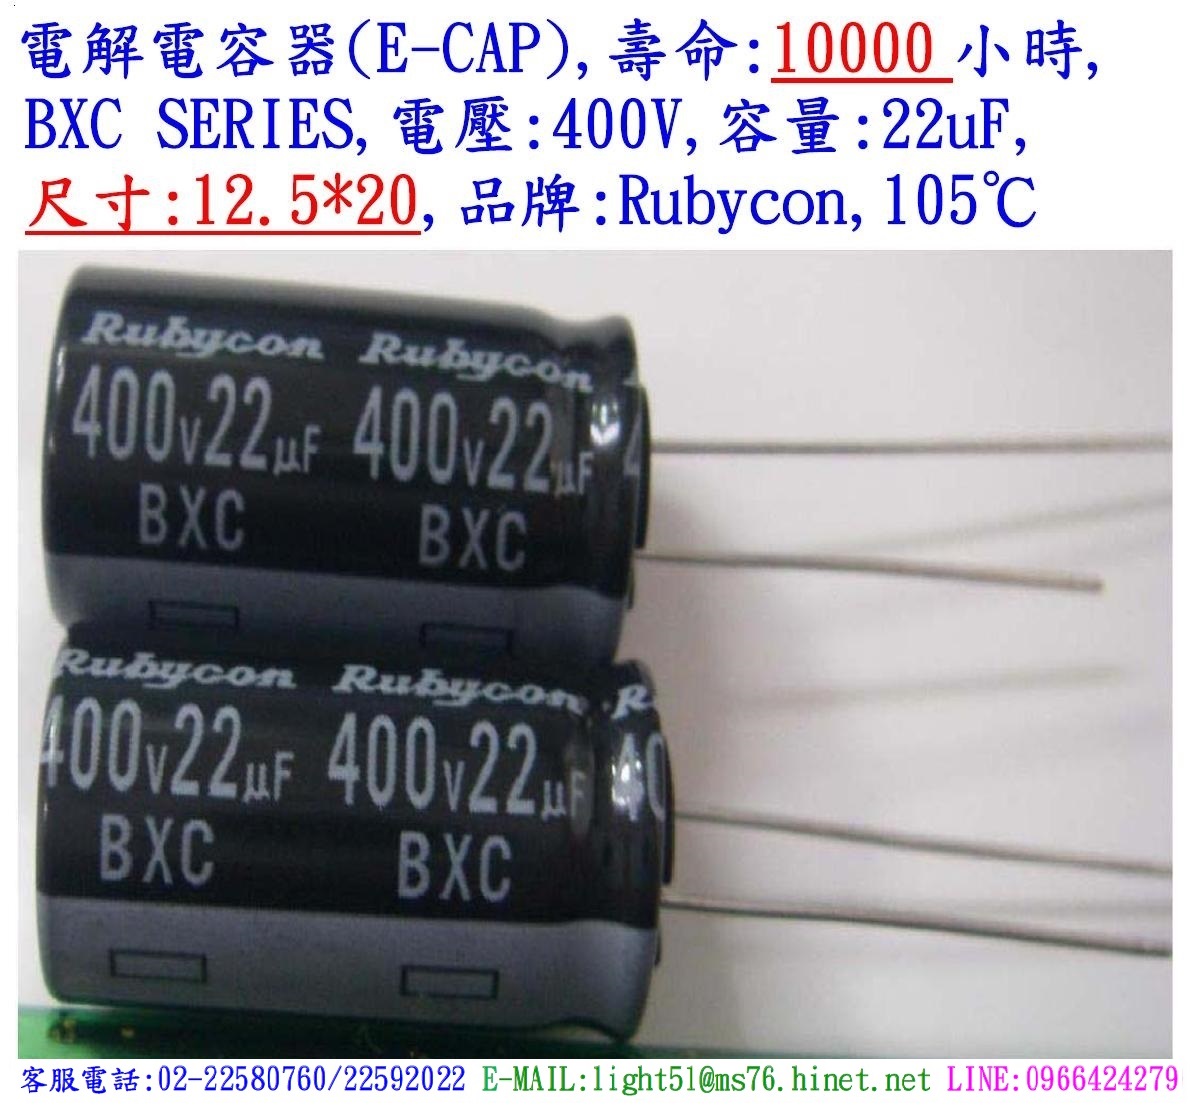 BXC,400V,22uF,尺寸:12.5*20,電解電容器,壽命:10000小時,Rubycon